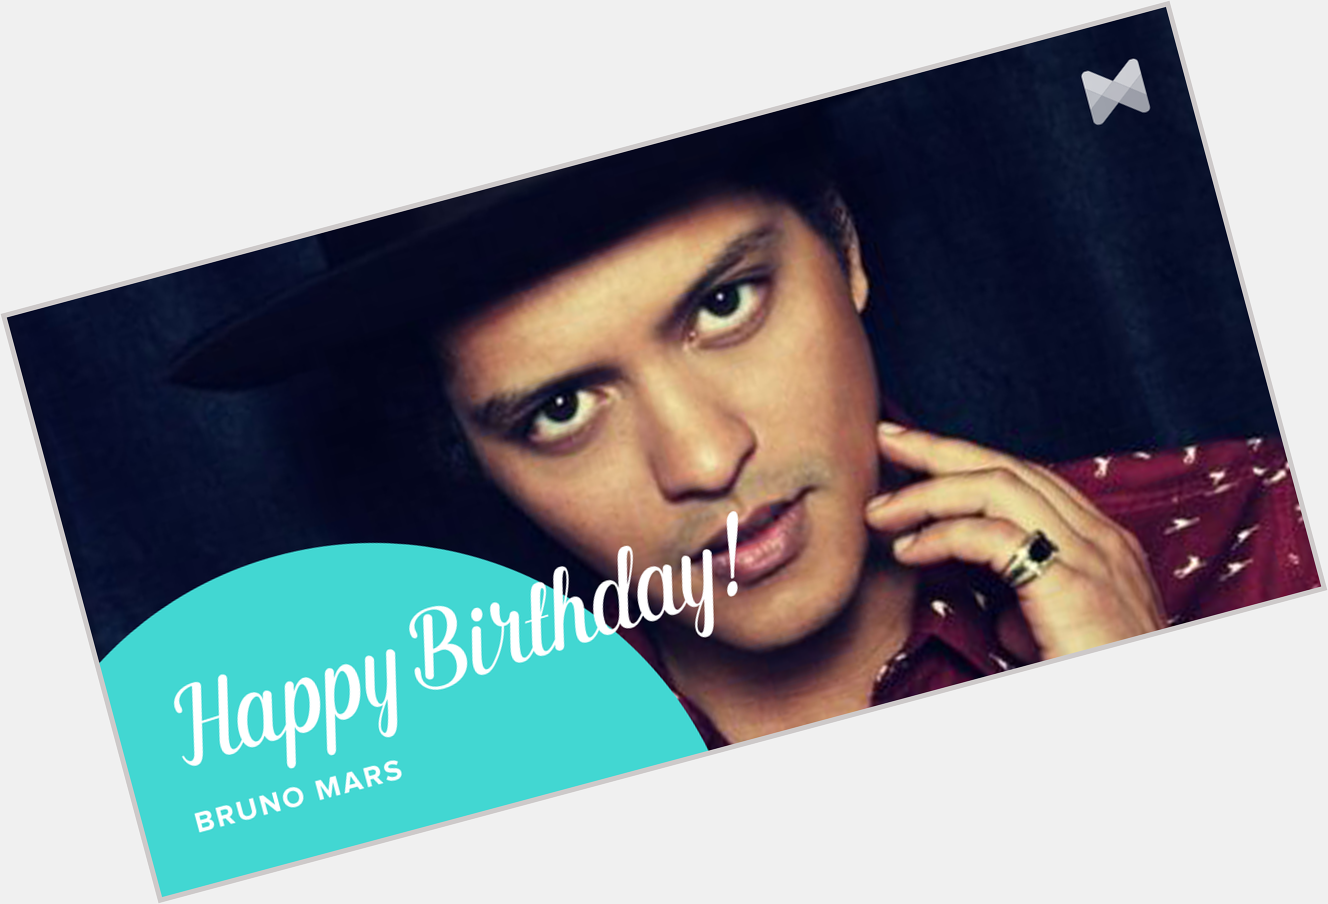 Happy Birthday, Bruno Mars! 
The singer turns 30 today! 